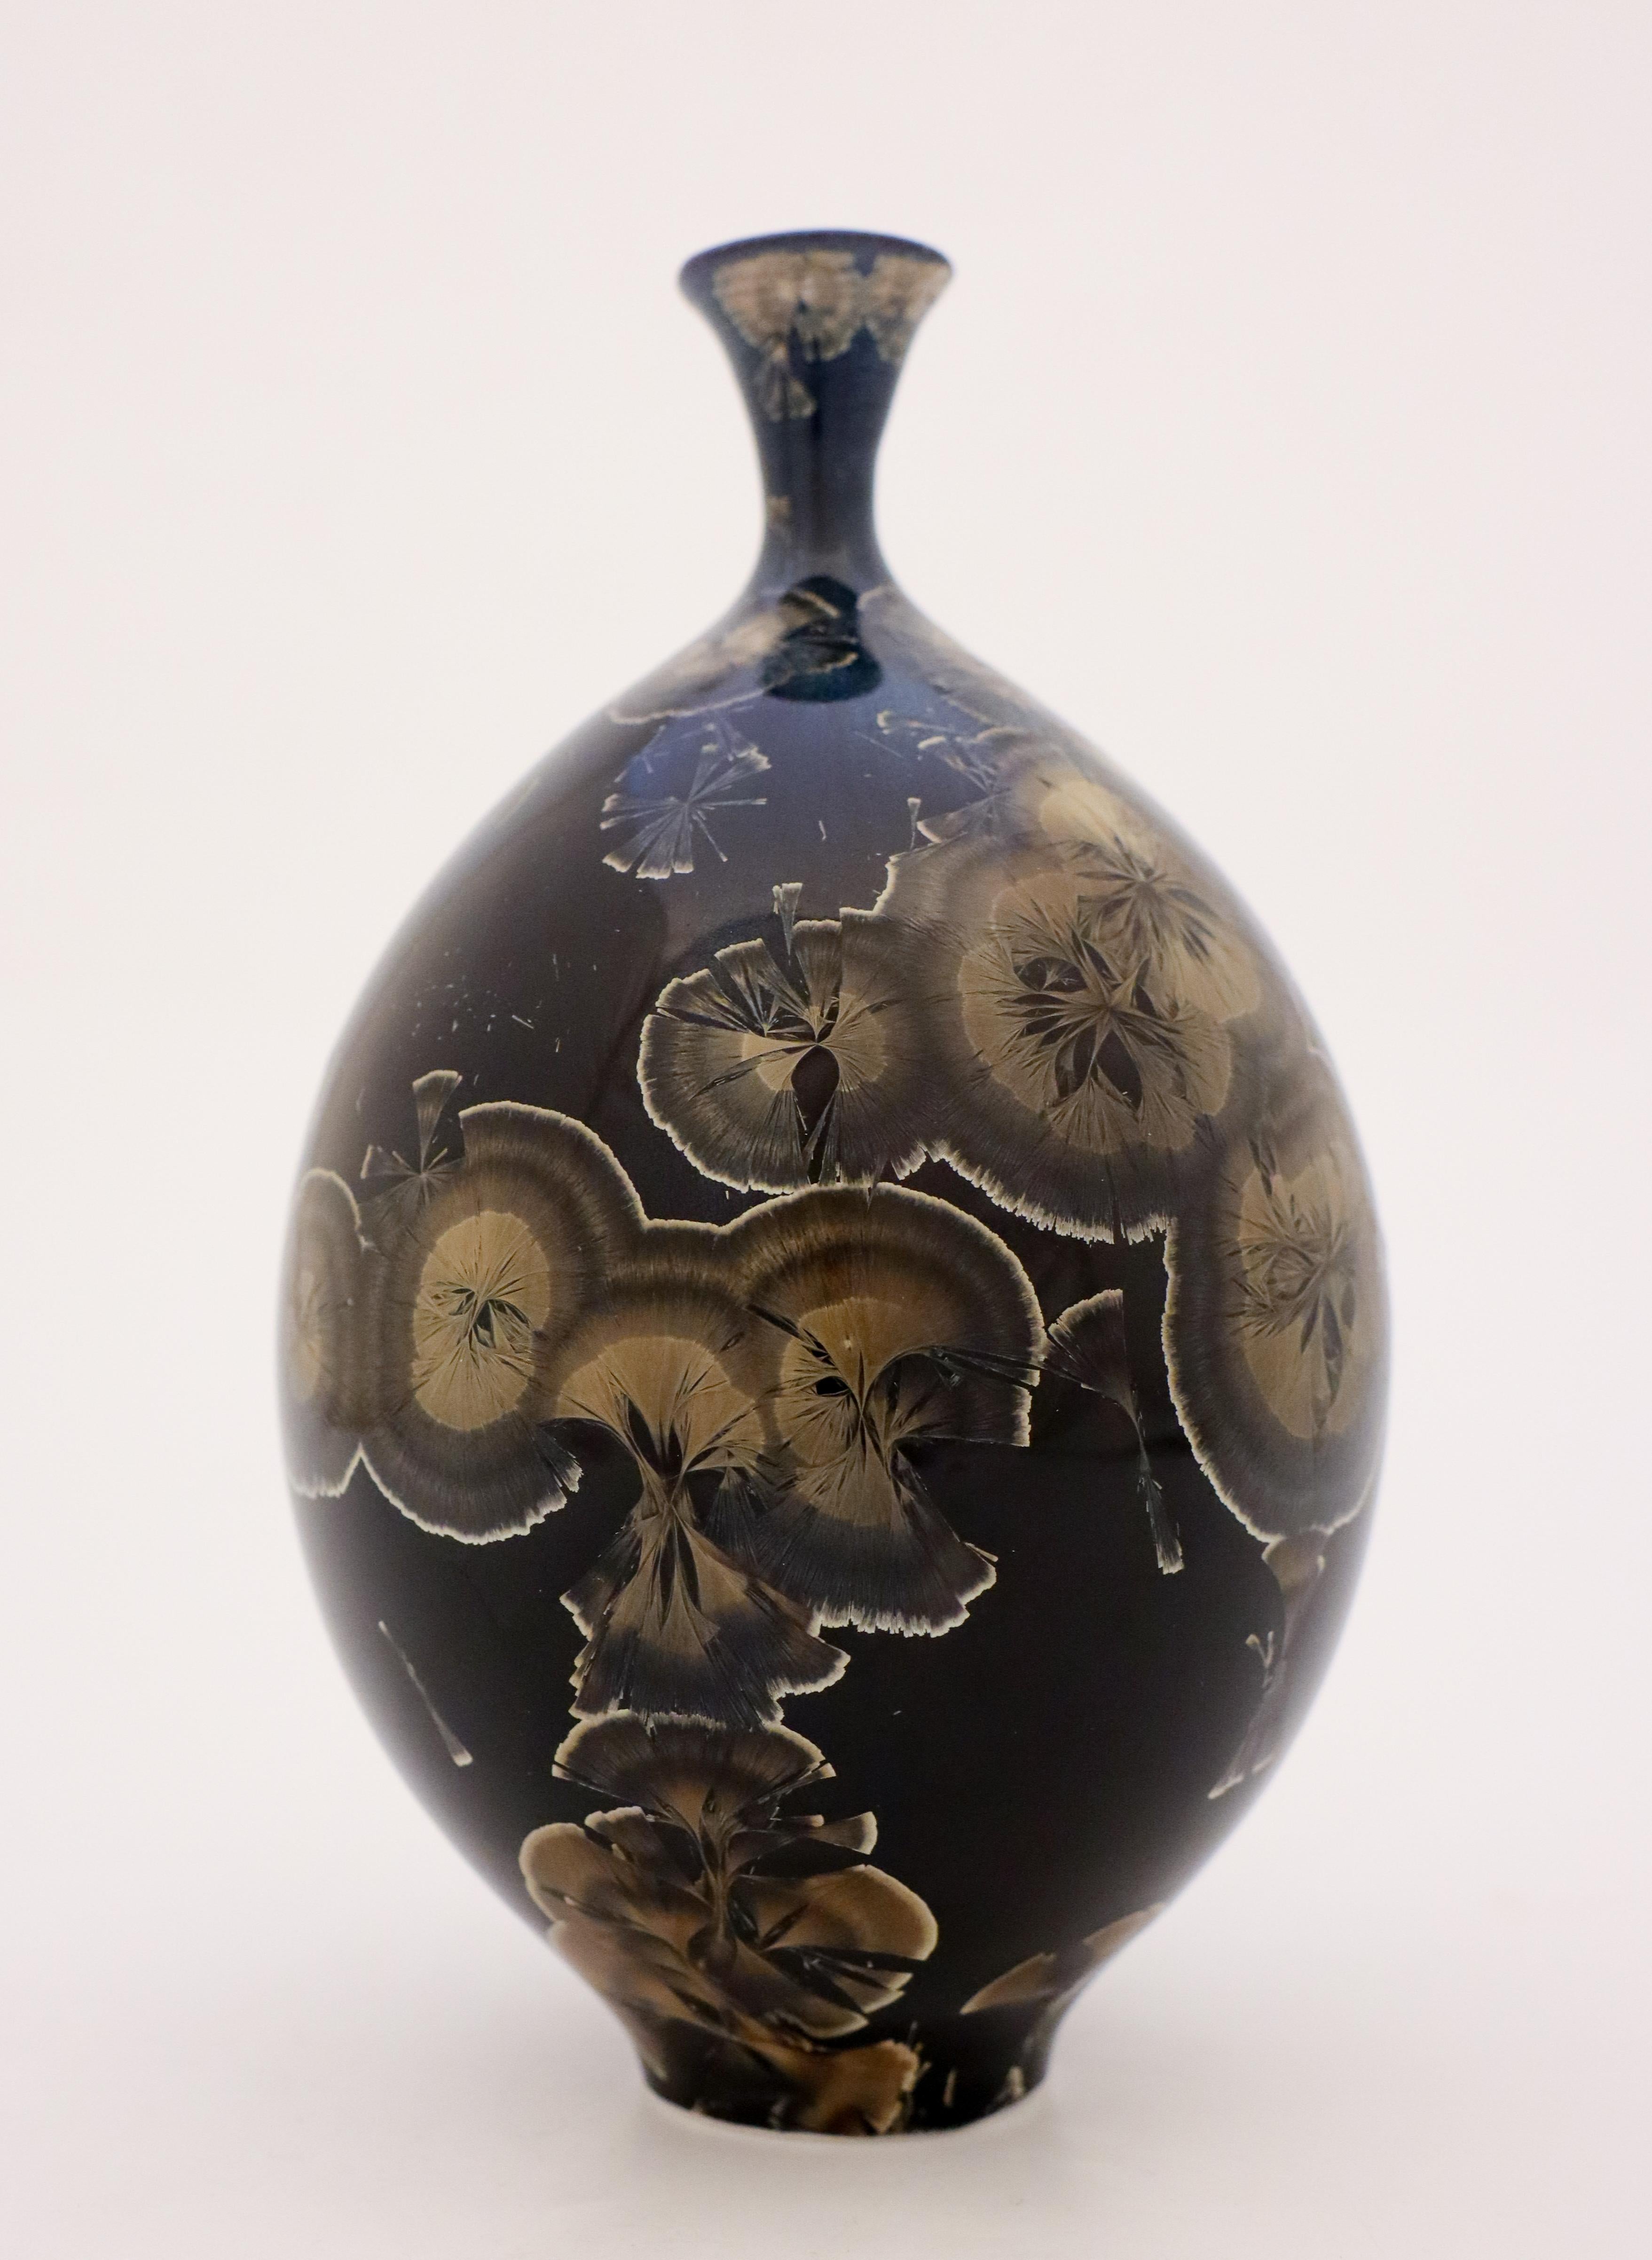 Porcelain Isak Isaksson, Vase with Crystalline Glaze, Contemporary Swedish Ceramicist